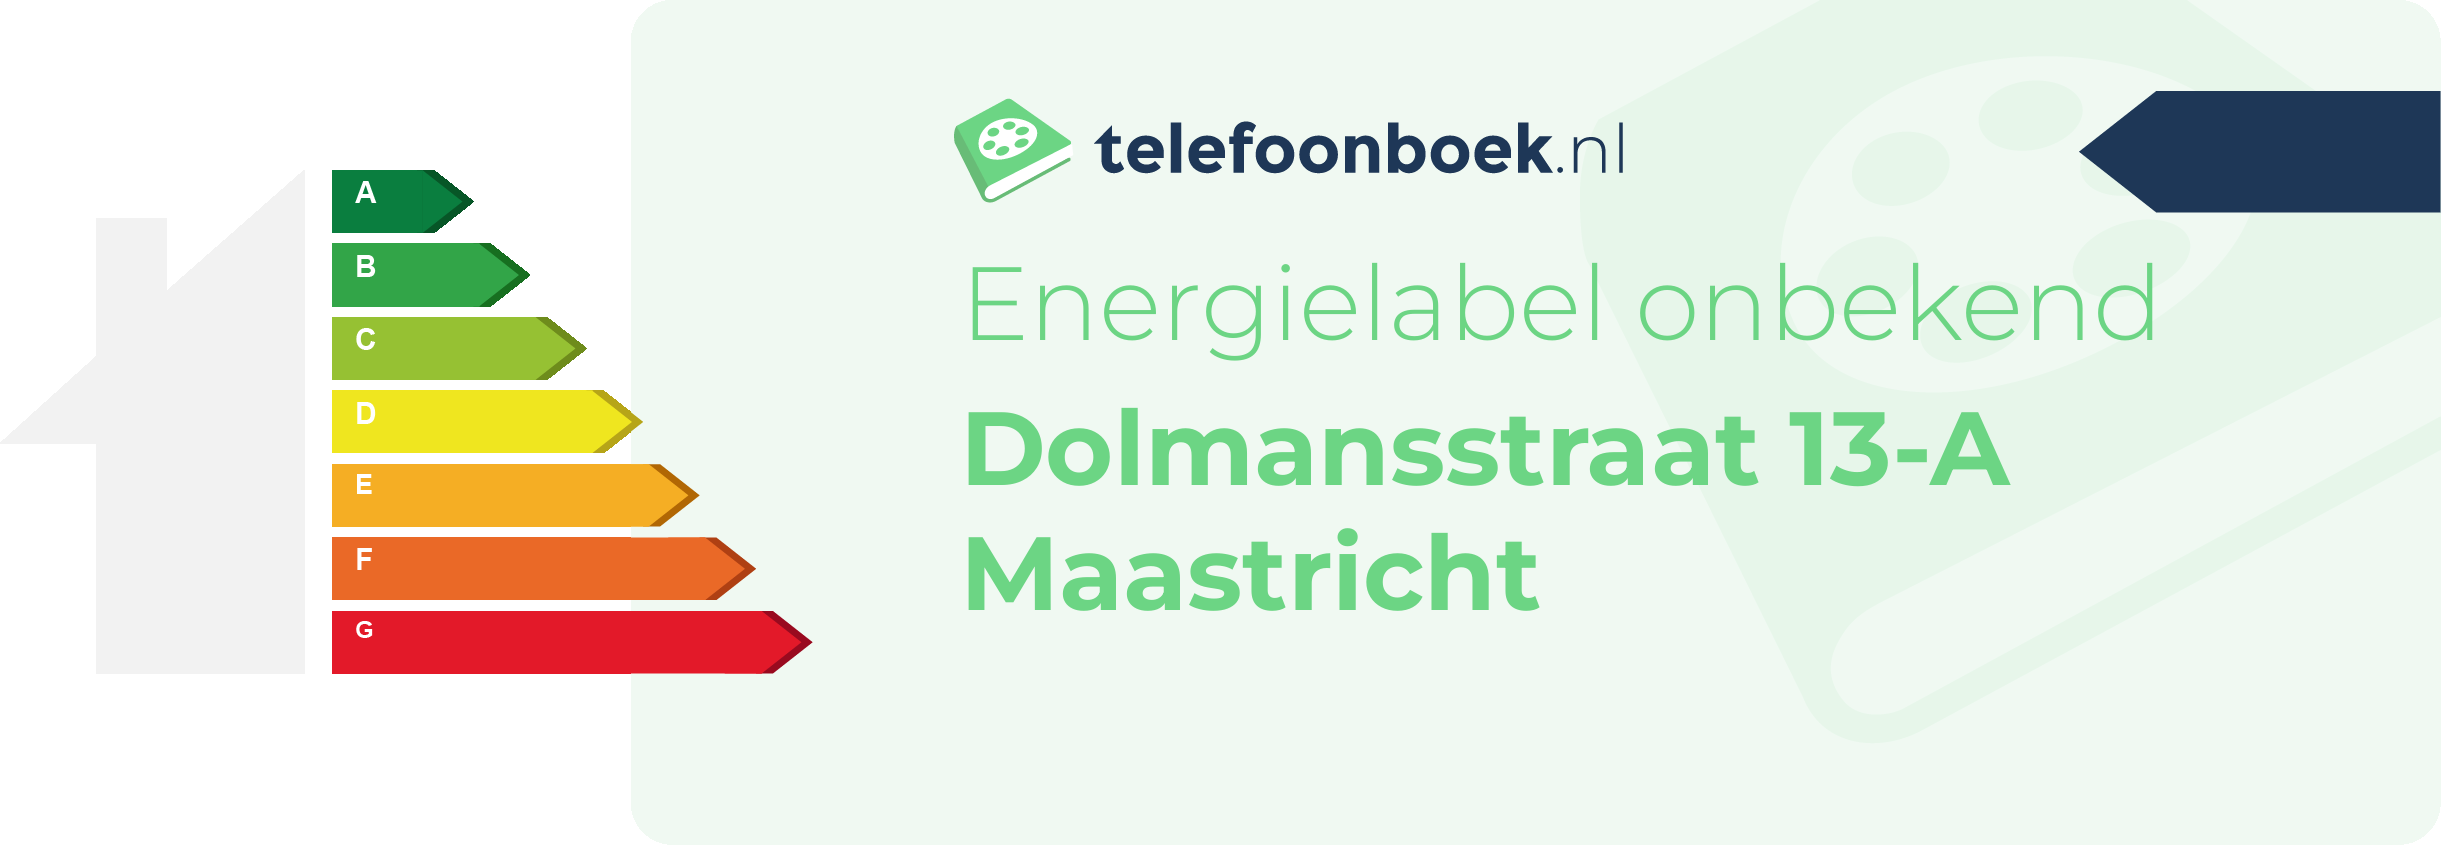 Energielabel Dolmansstraat 13-A Maastricht